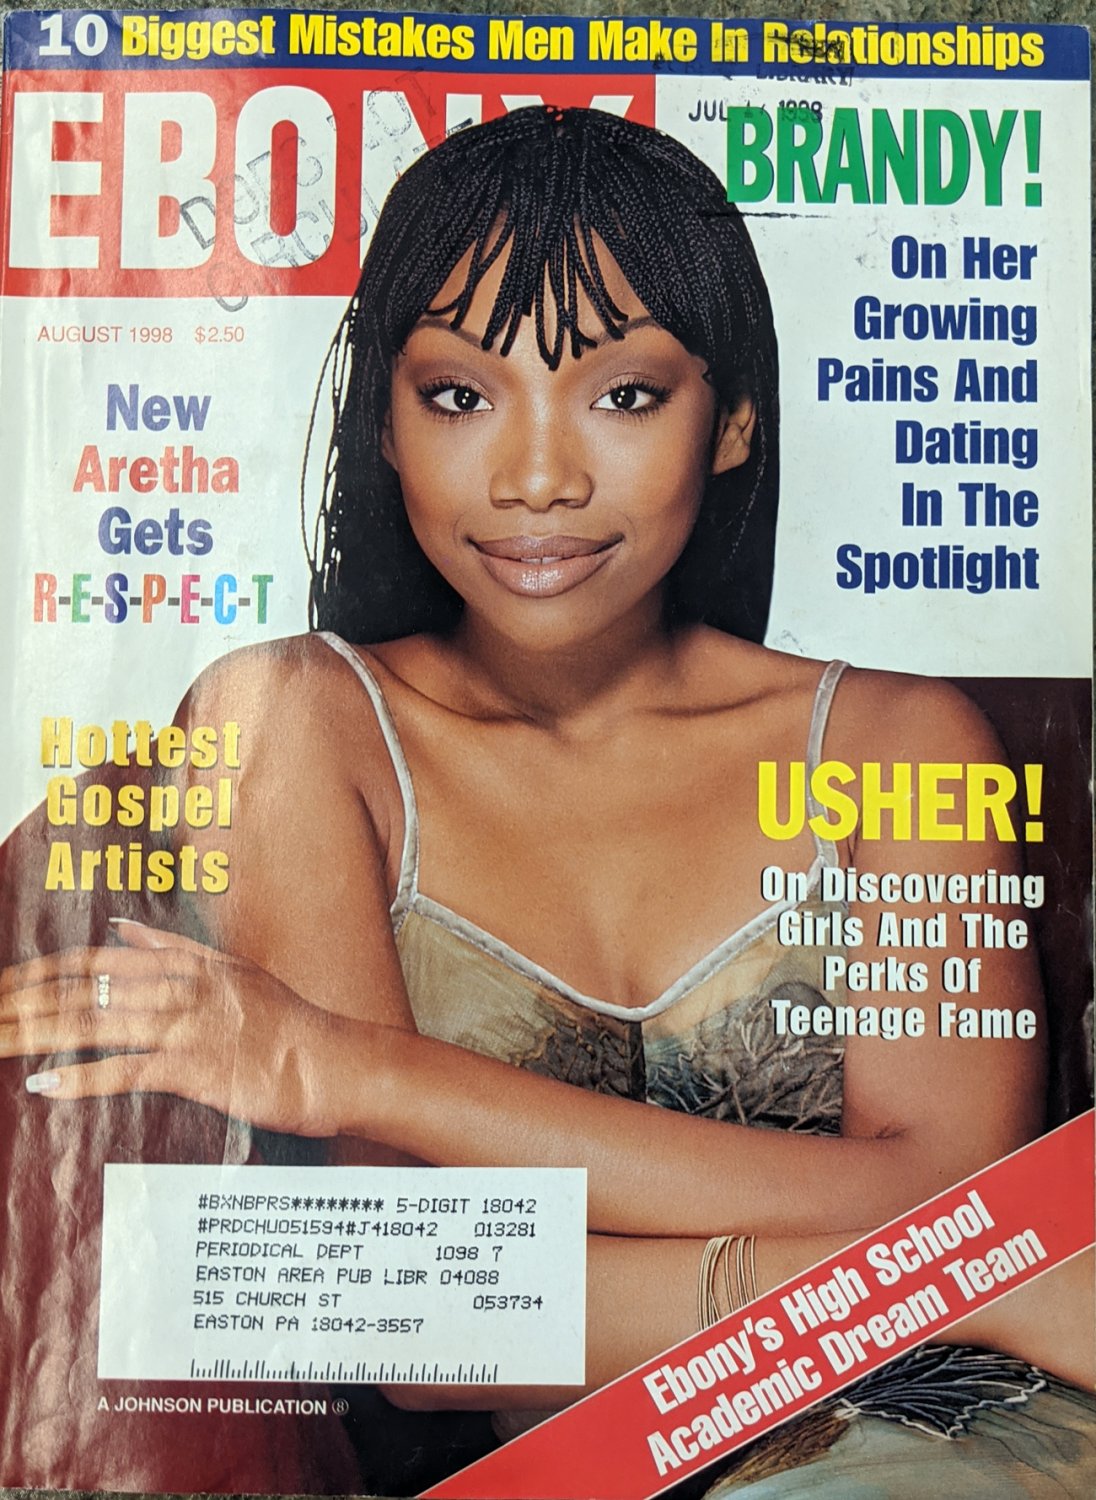 Ebony magazine august 1998 - brandy cover.